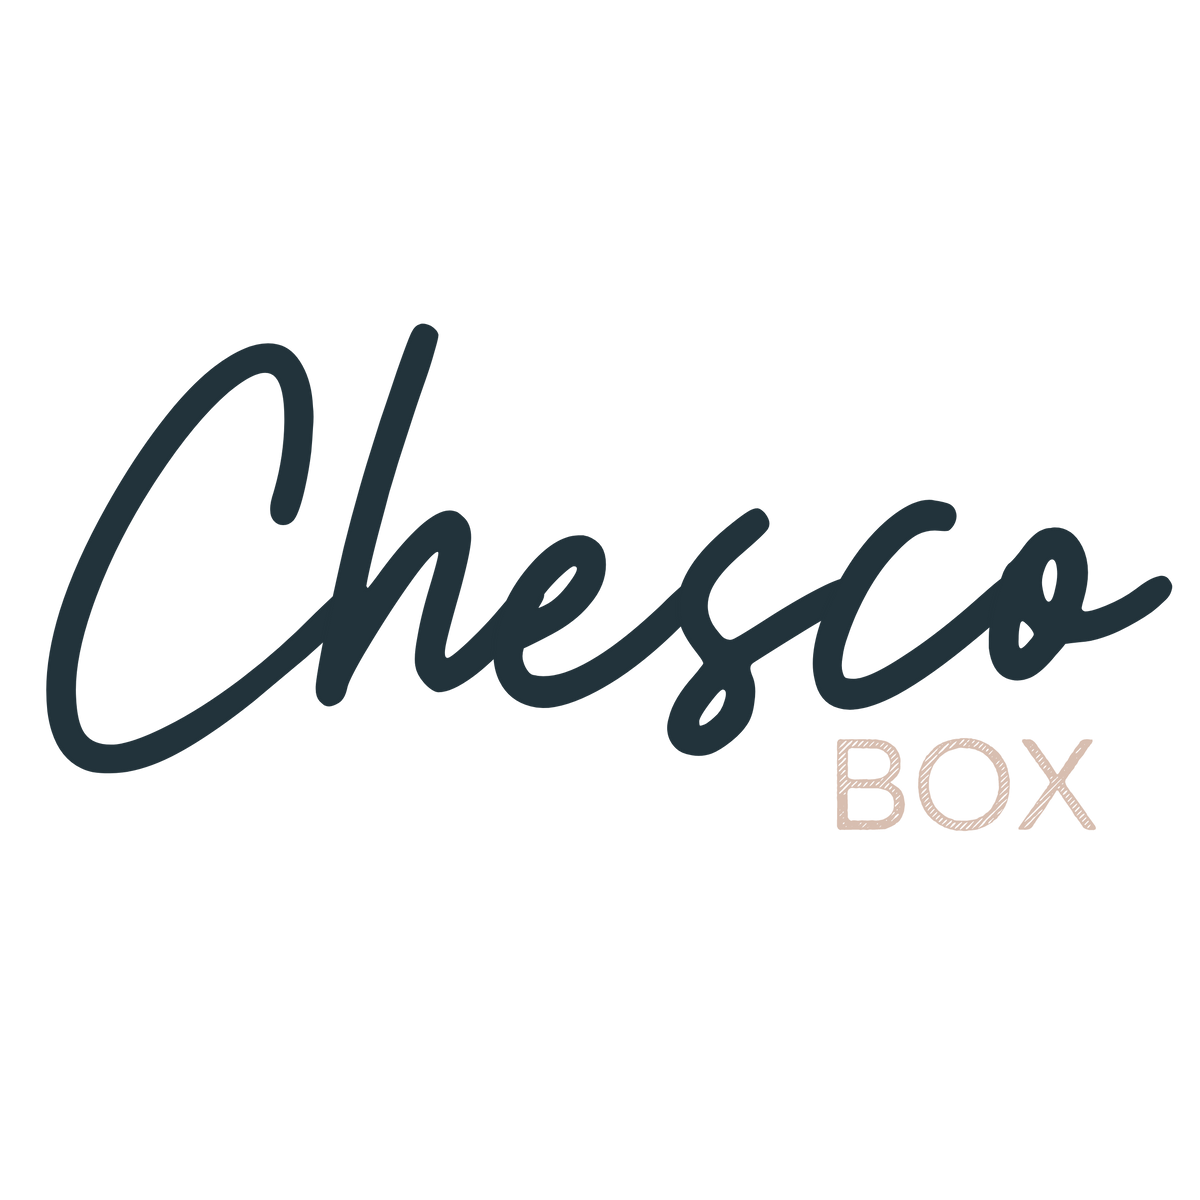 Chesco Box